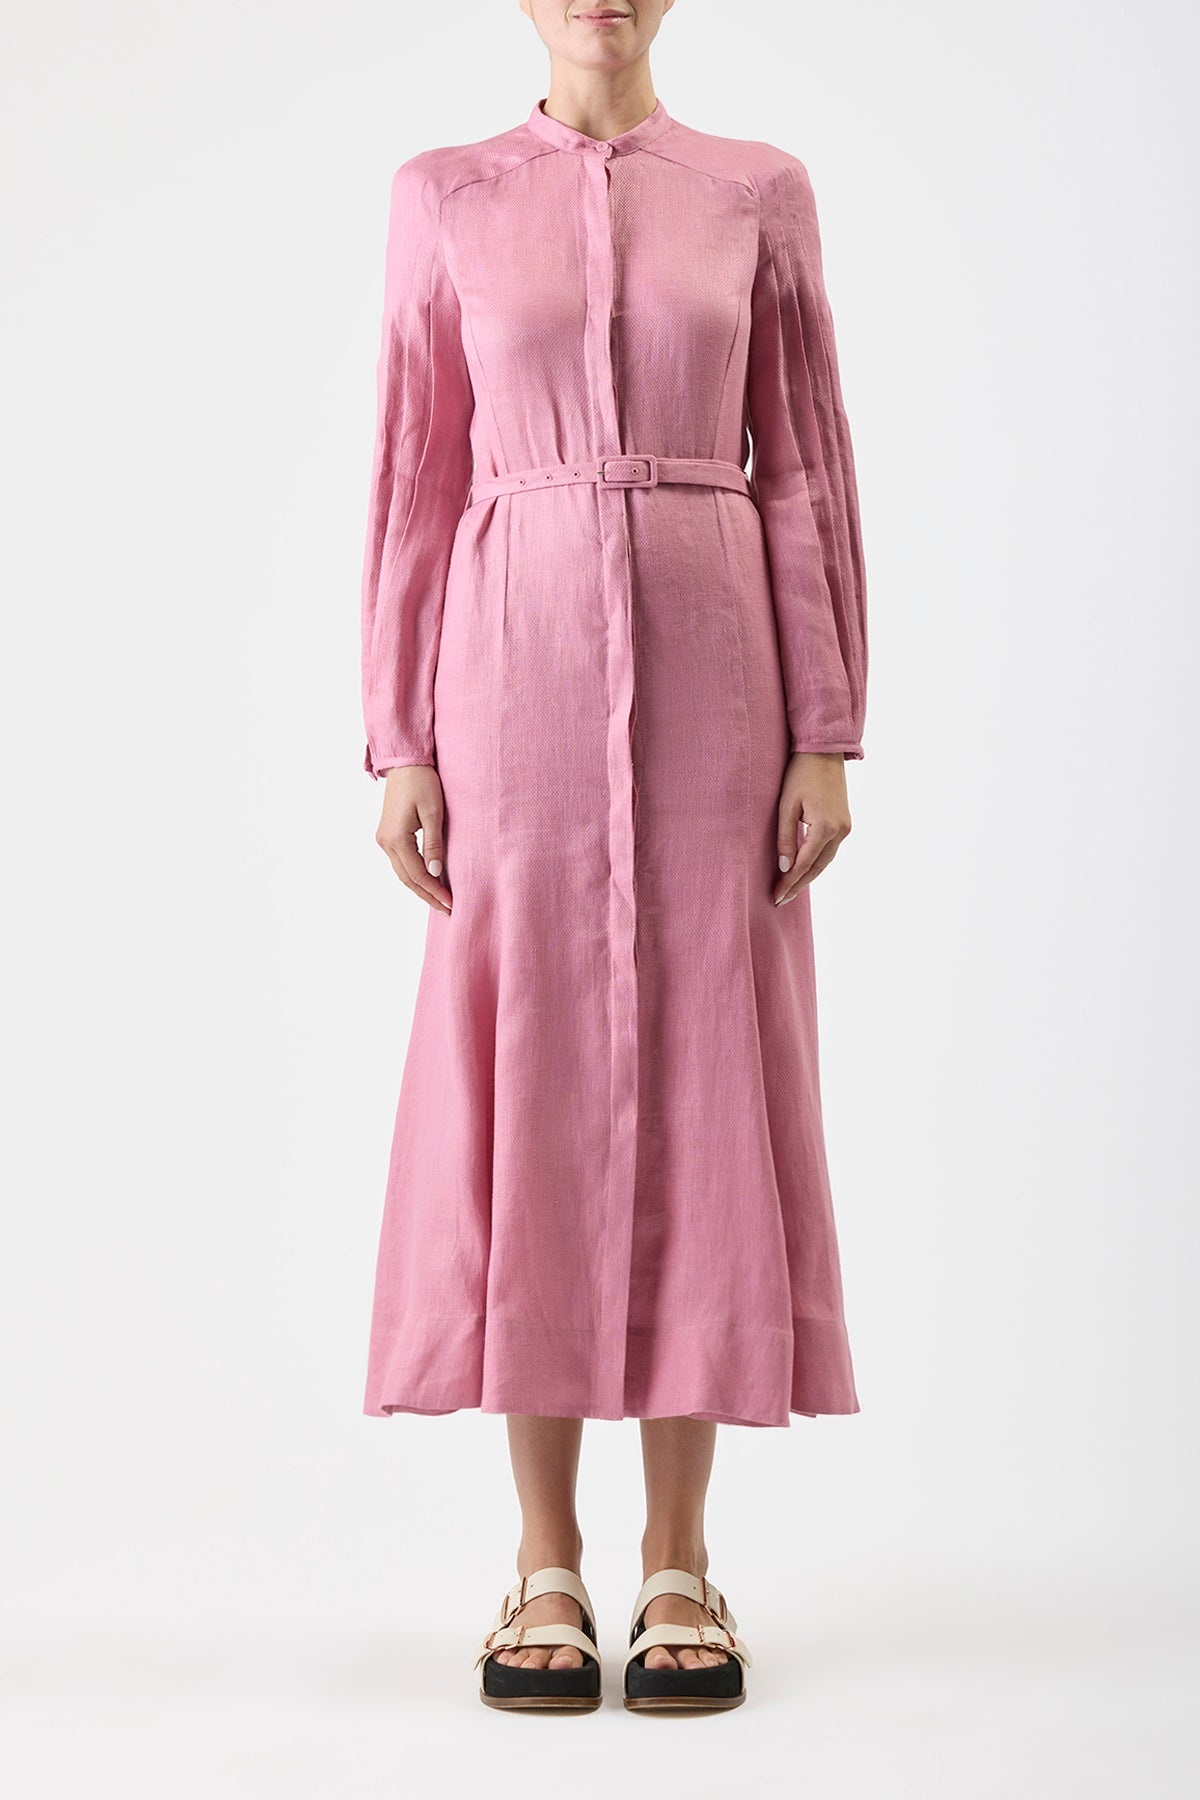 Lydia Dress with Slip in Rose Quartz Linen - 2